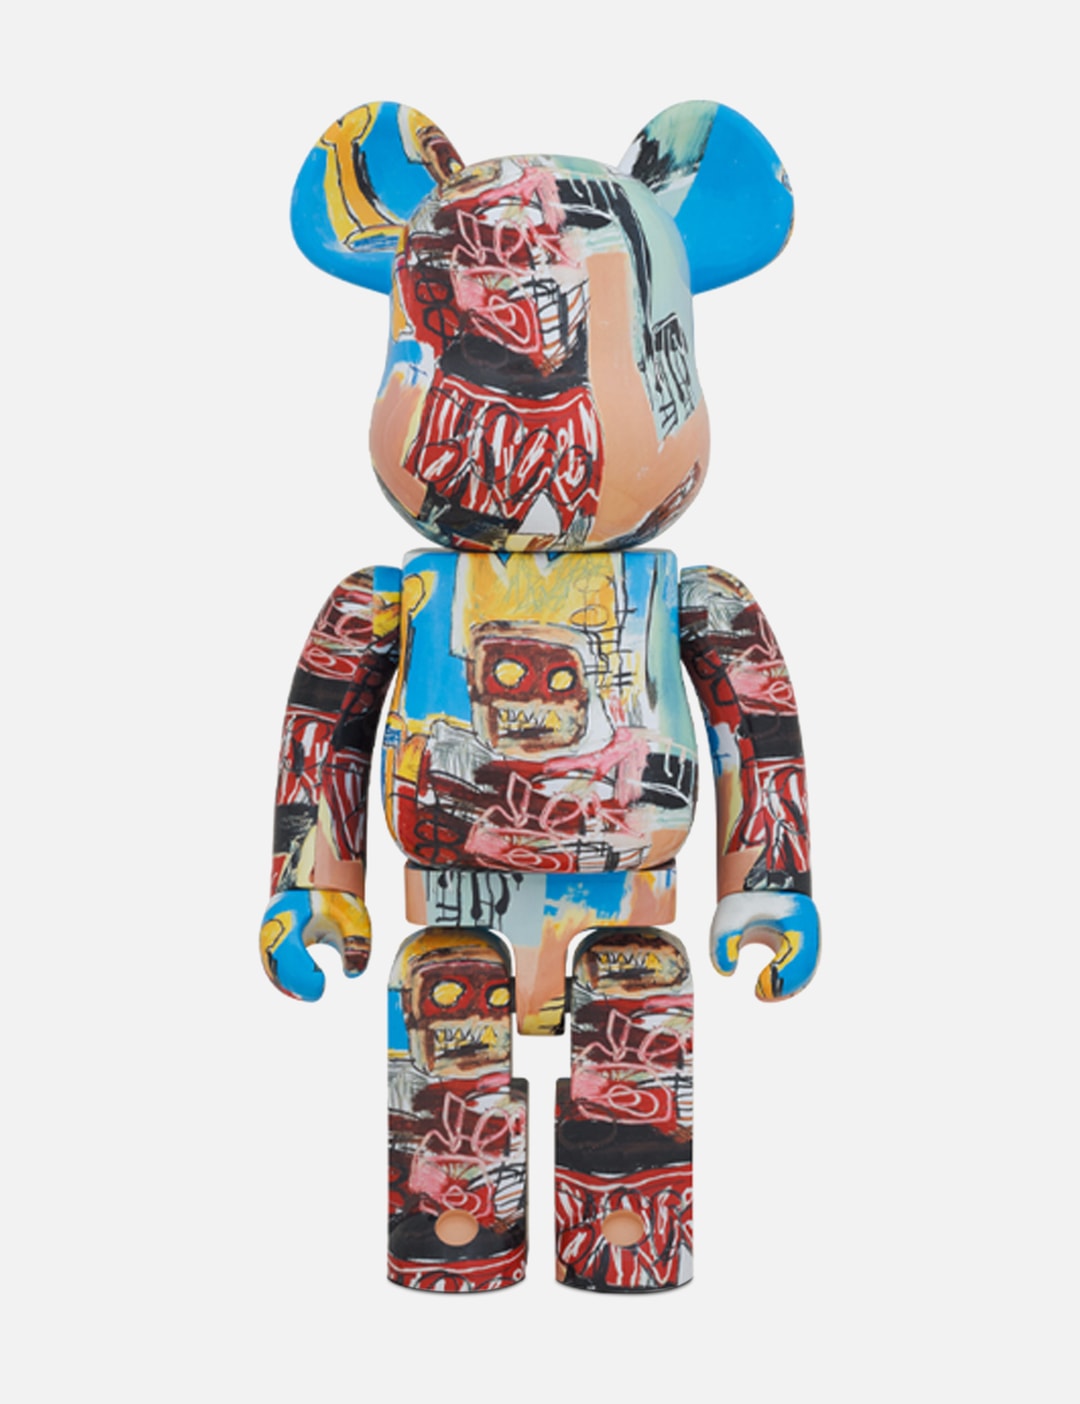 Medicom Toy - Be@rbrick Jean Michel Basquiat #6 1000% | HBX - Globally ...